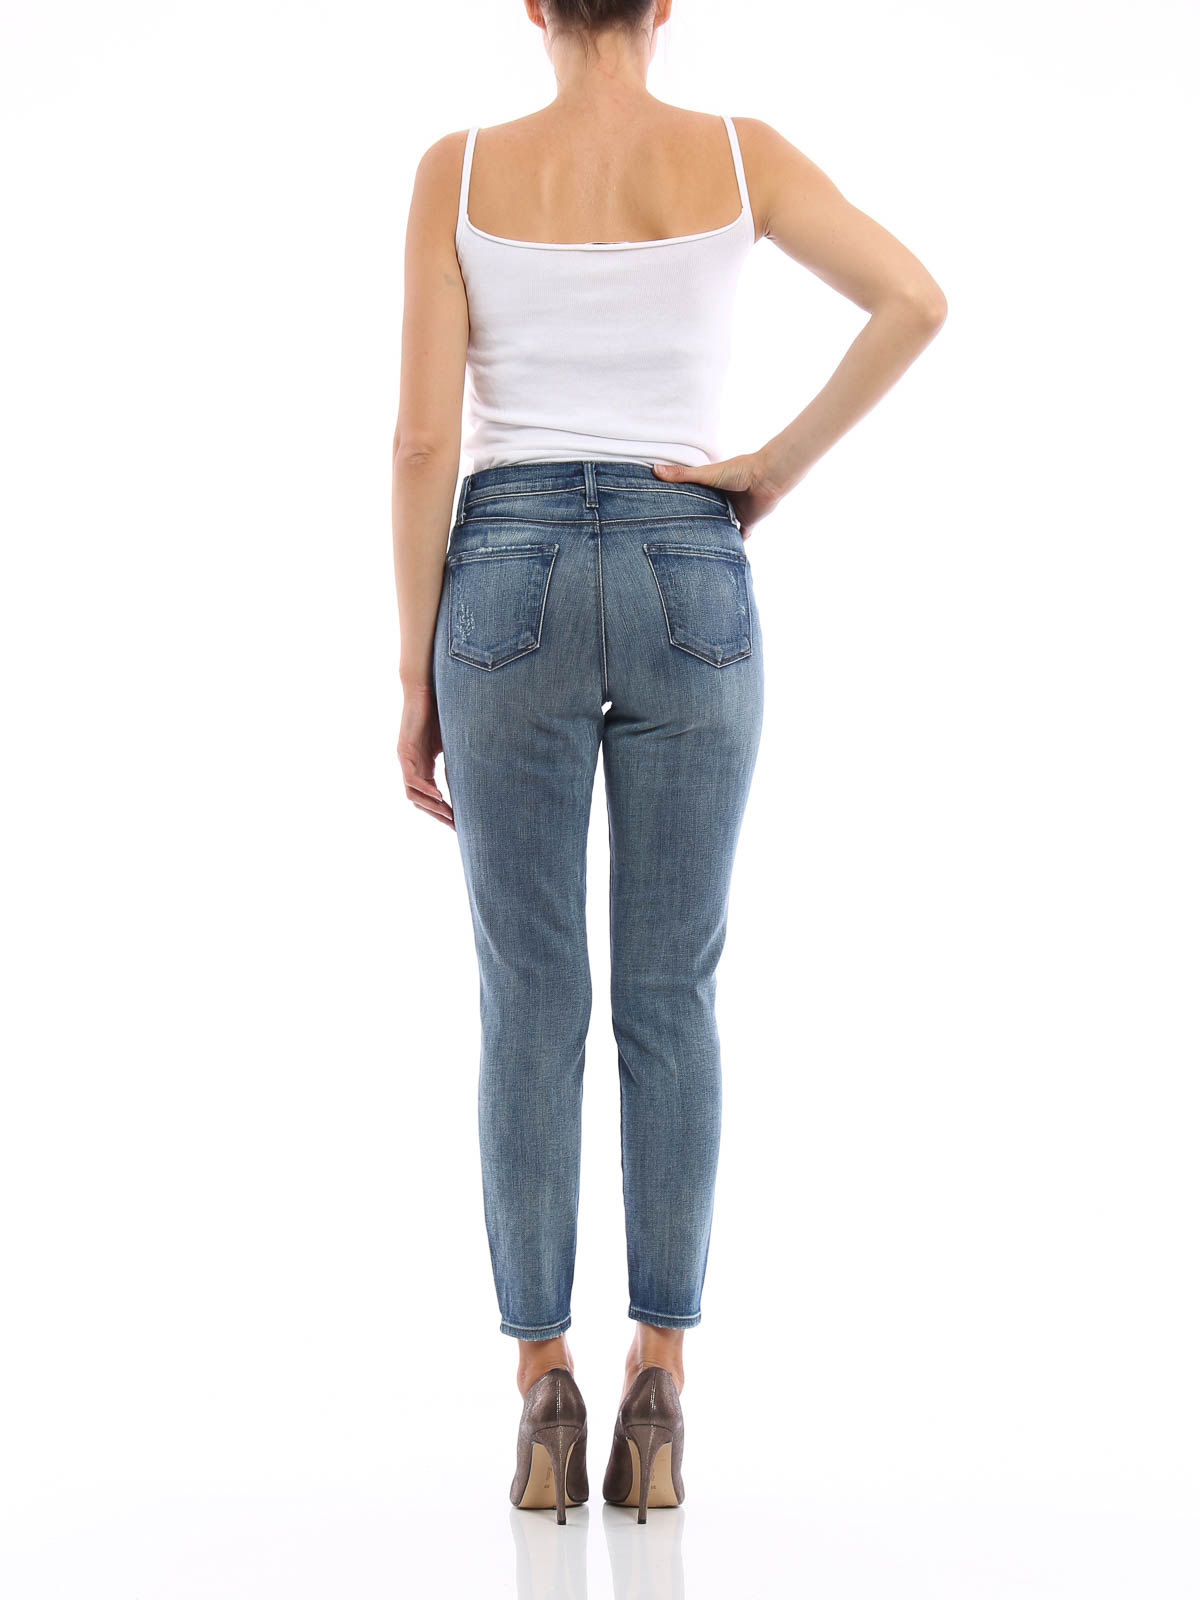 Moment lila Schijnen Straight leg jeans J Brand - Alana faded jeans - 23127T178RENDITION